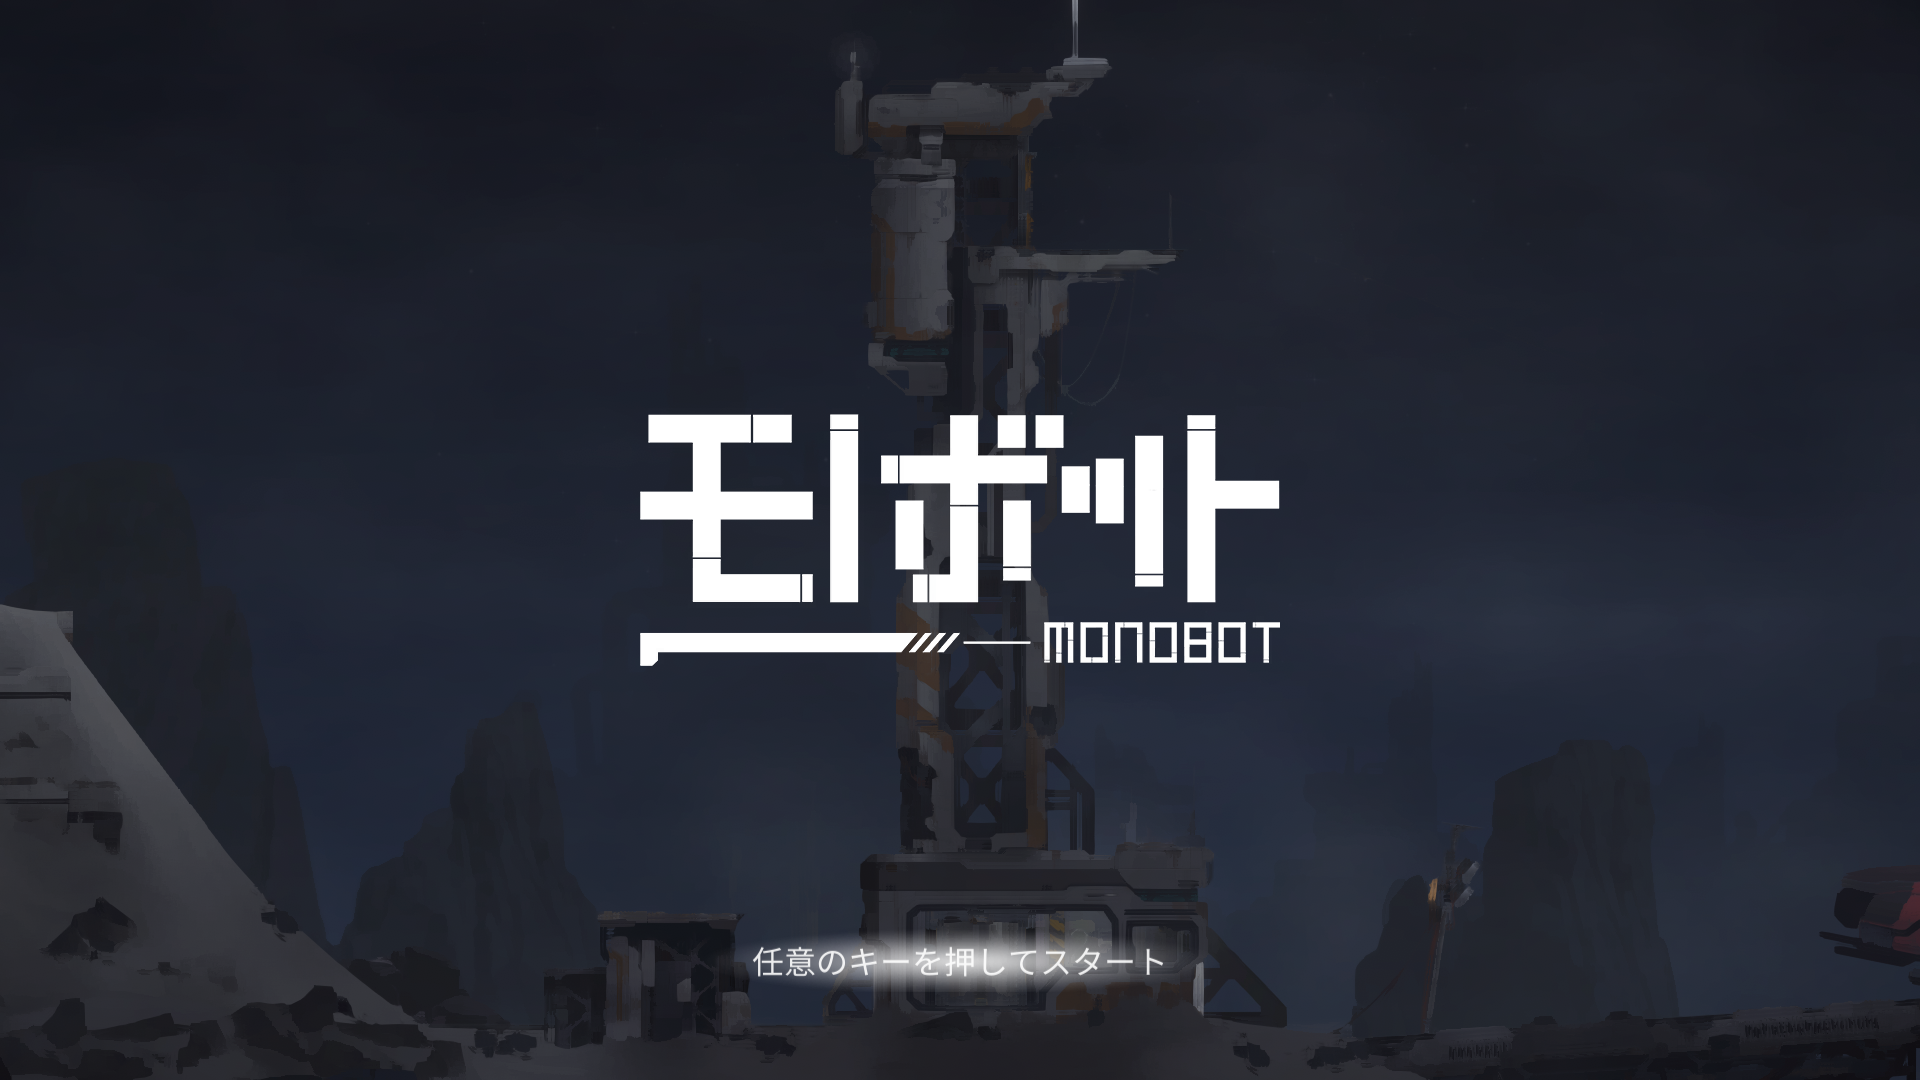 2Dパズルアクションゲーム『モノボット』の
Nintendo Switch版が12月2日に配信開始！